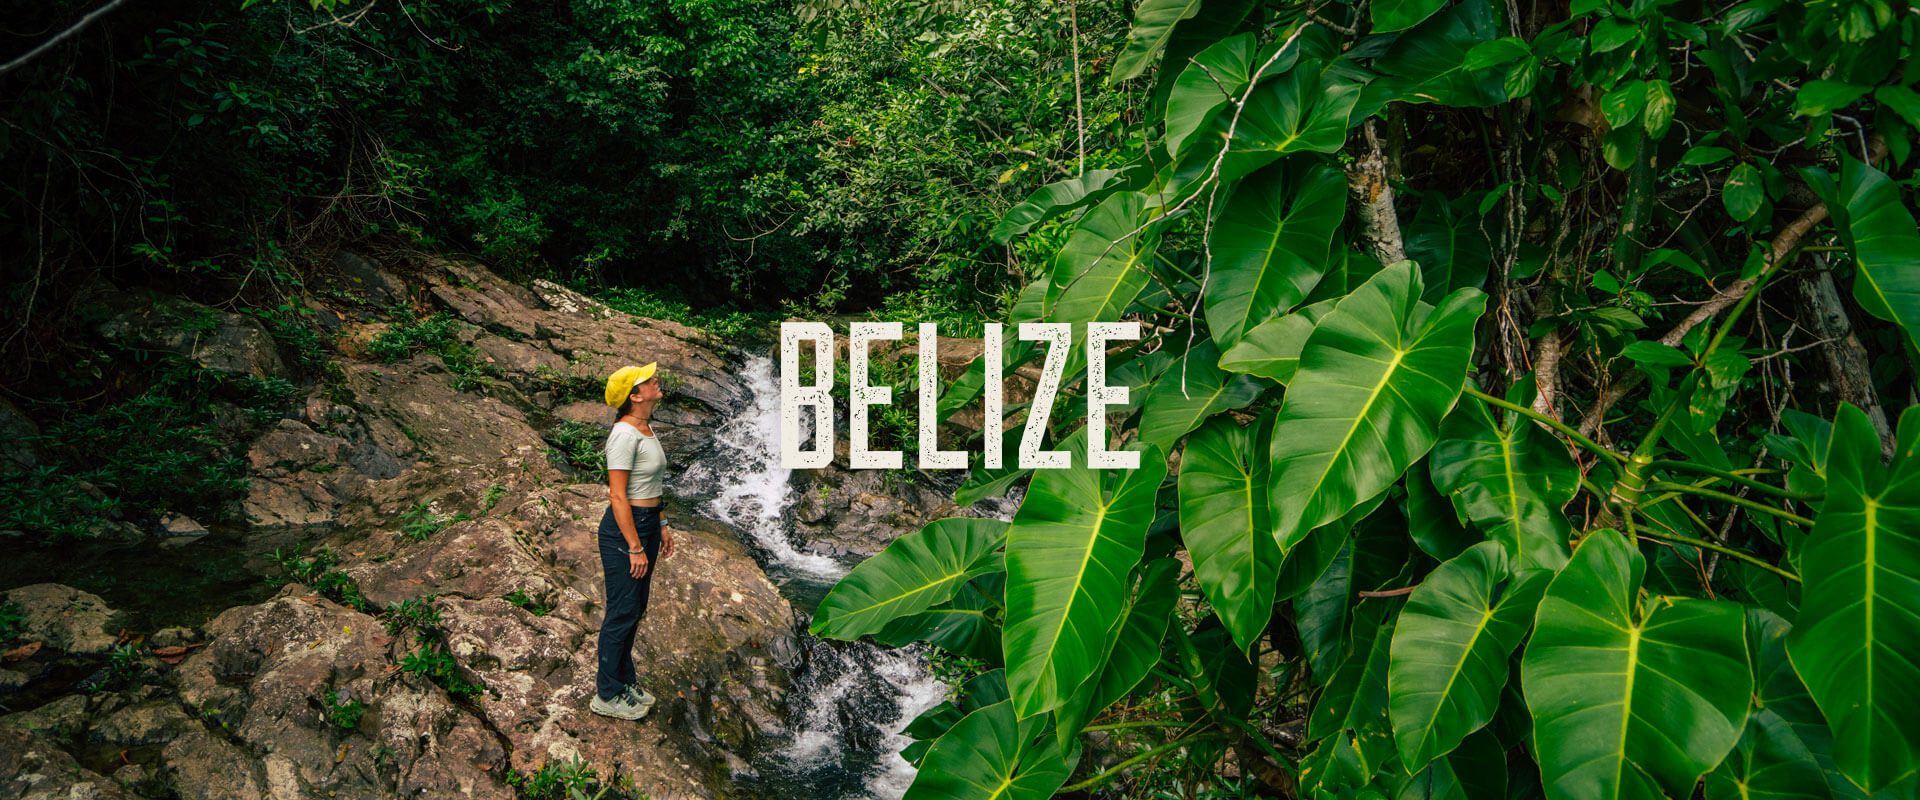 OnVagabonde_Belize_Banners_Desktop